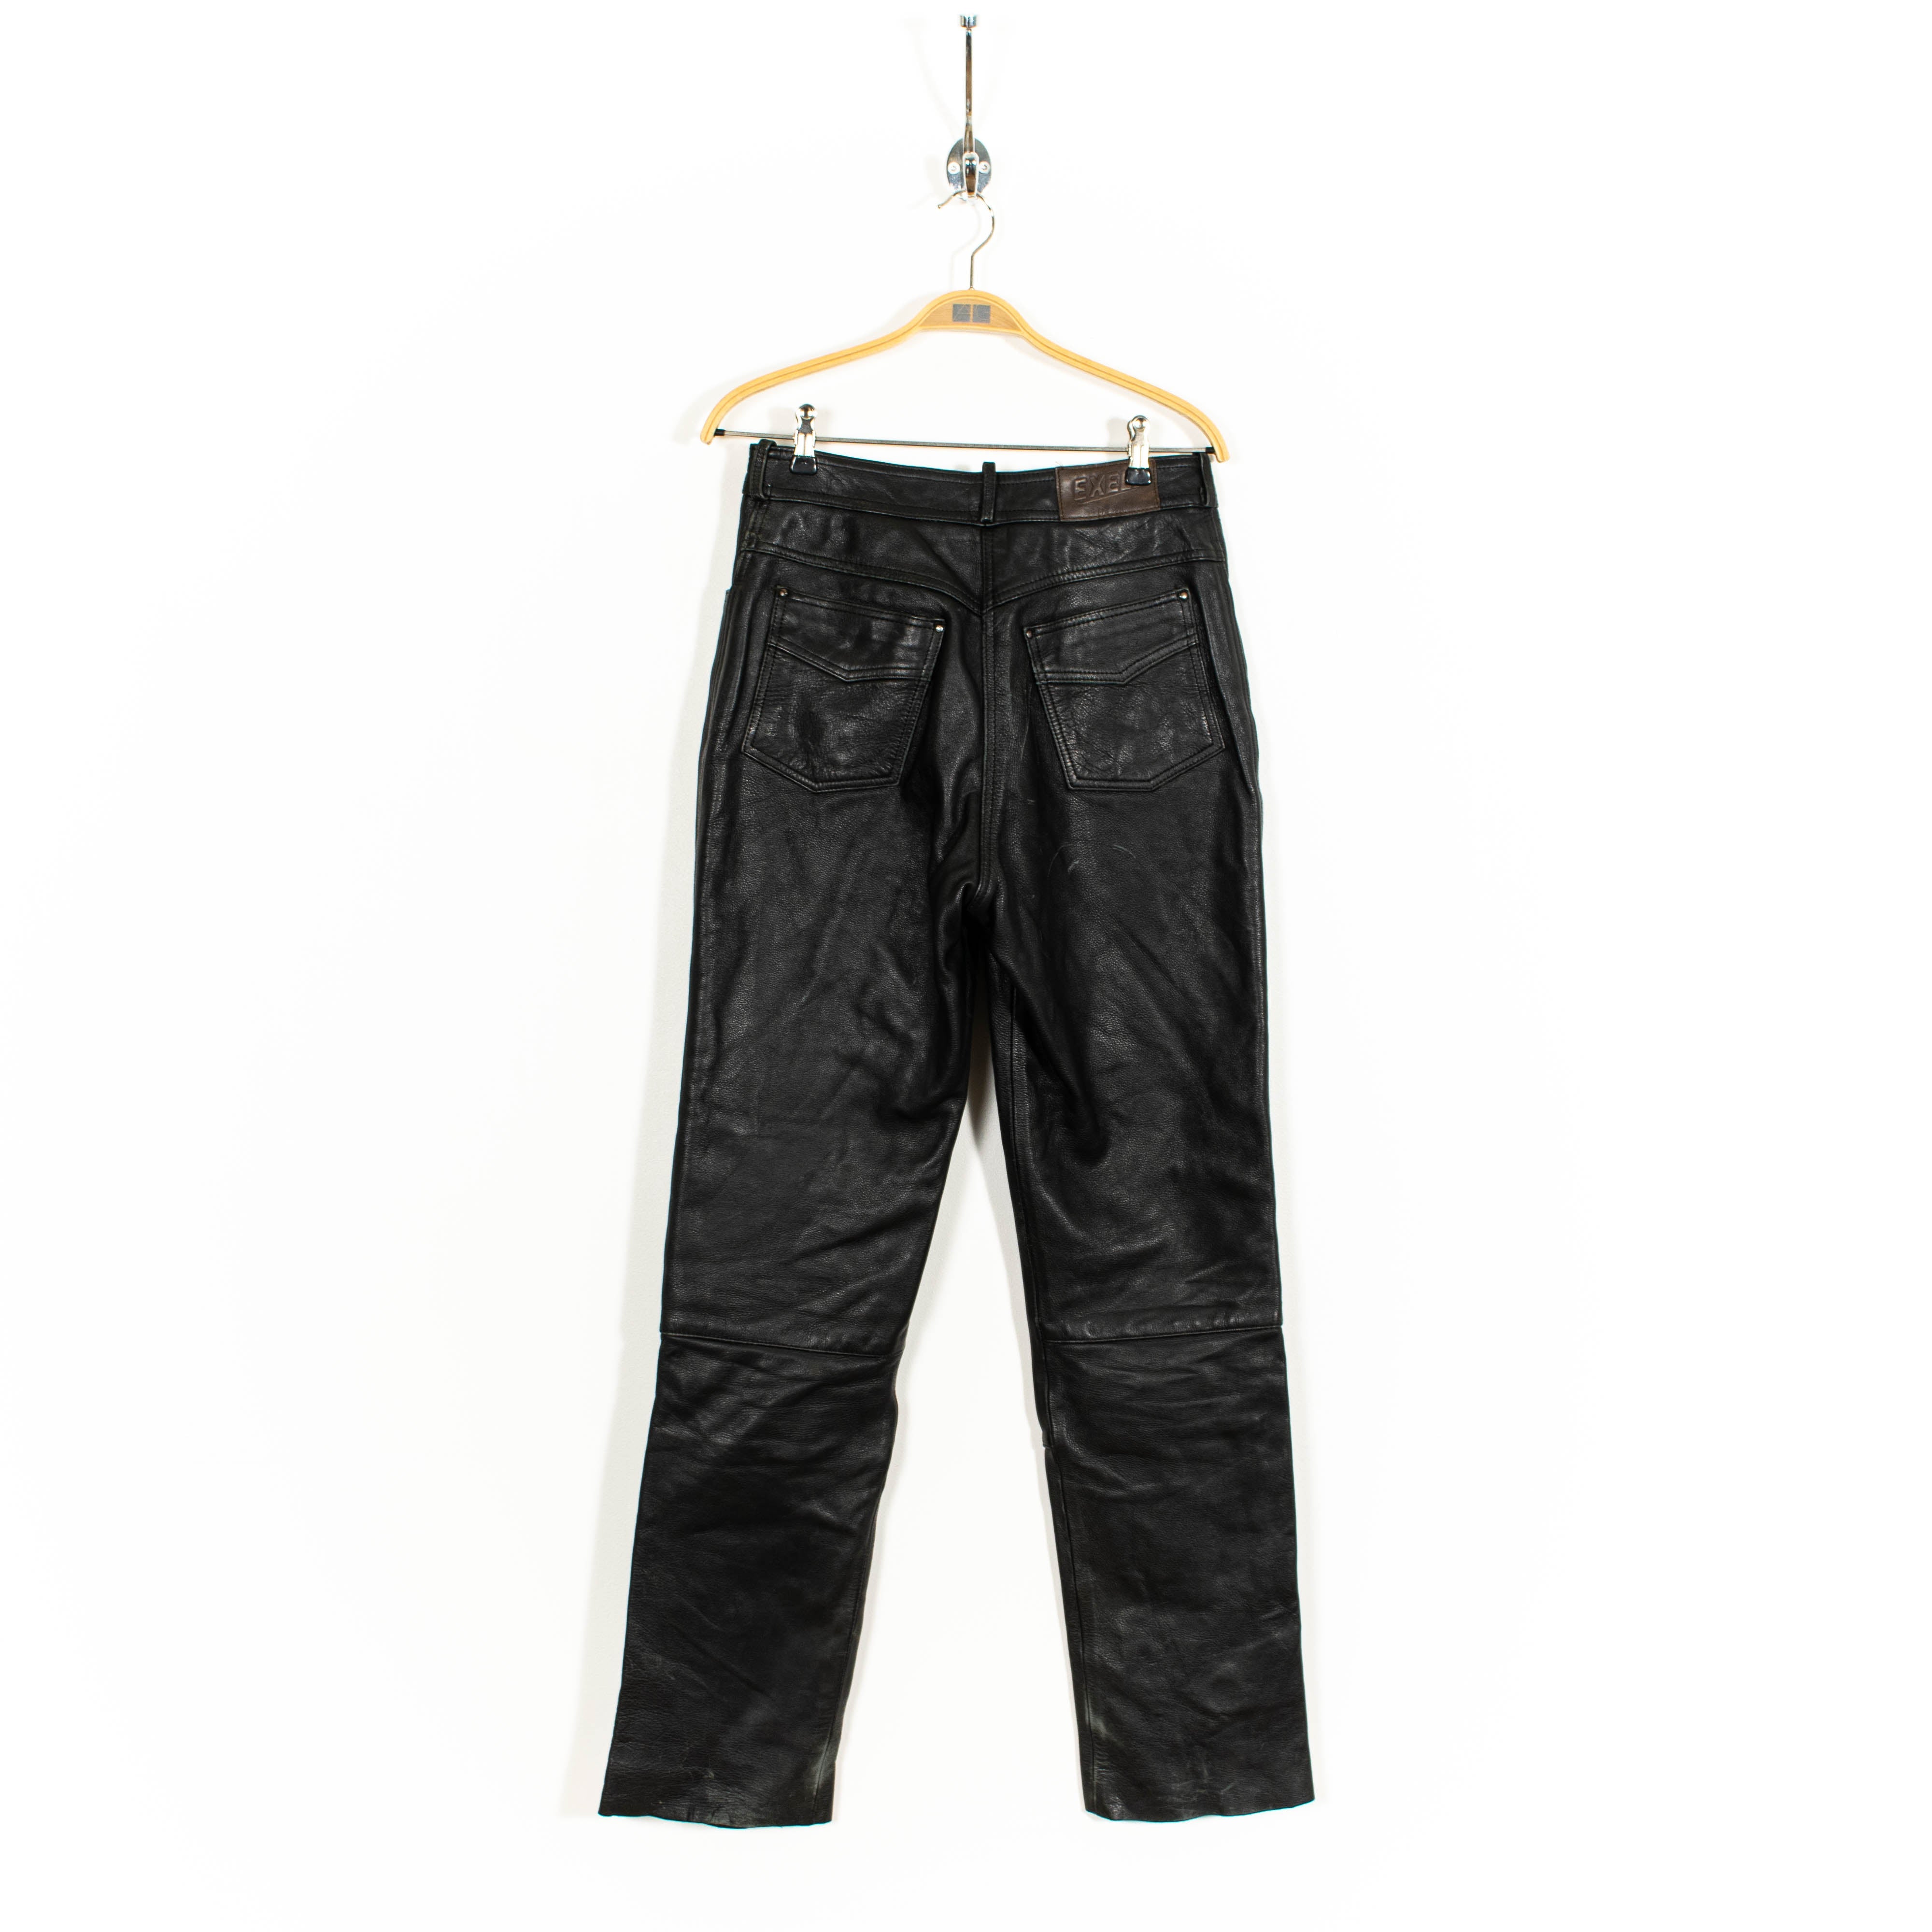 Vintage Black Leather Zip Up Carrot Fit Pants Mens US29